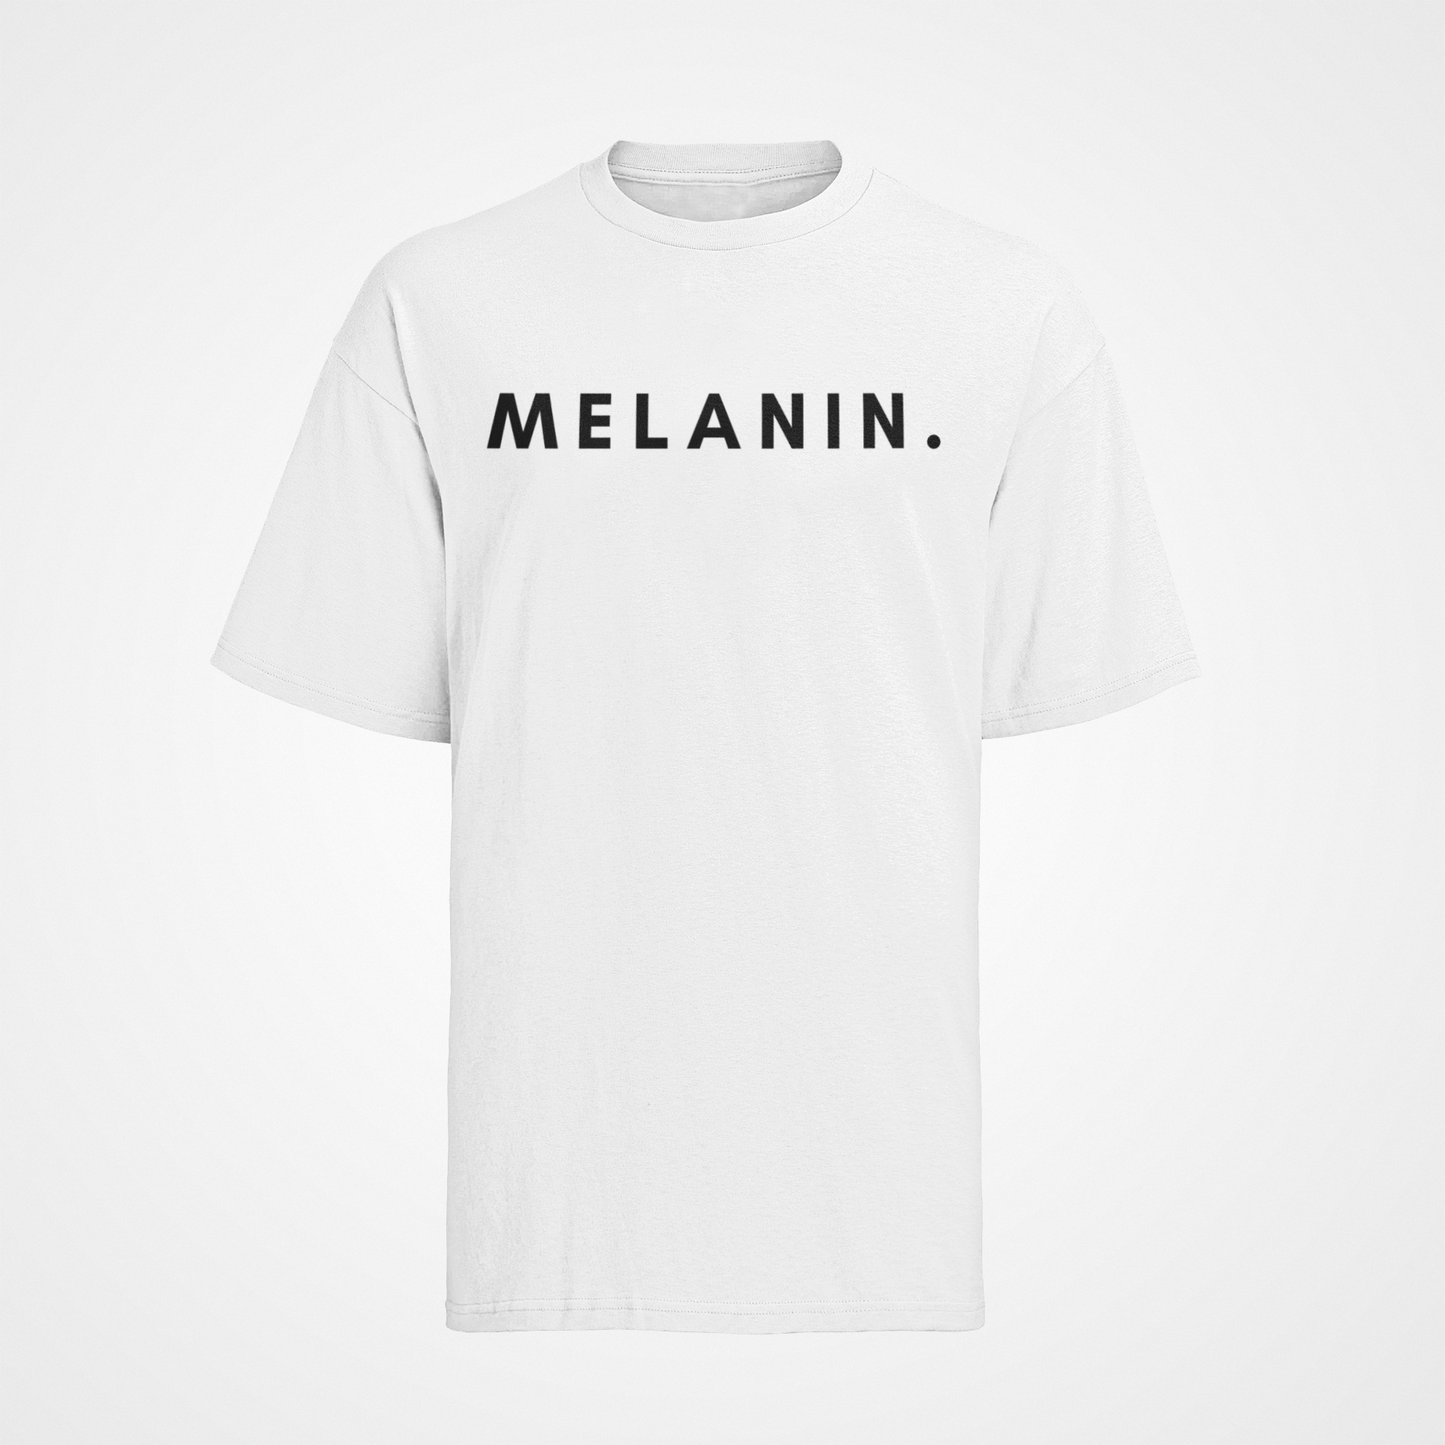 Melanin.